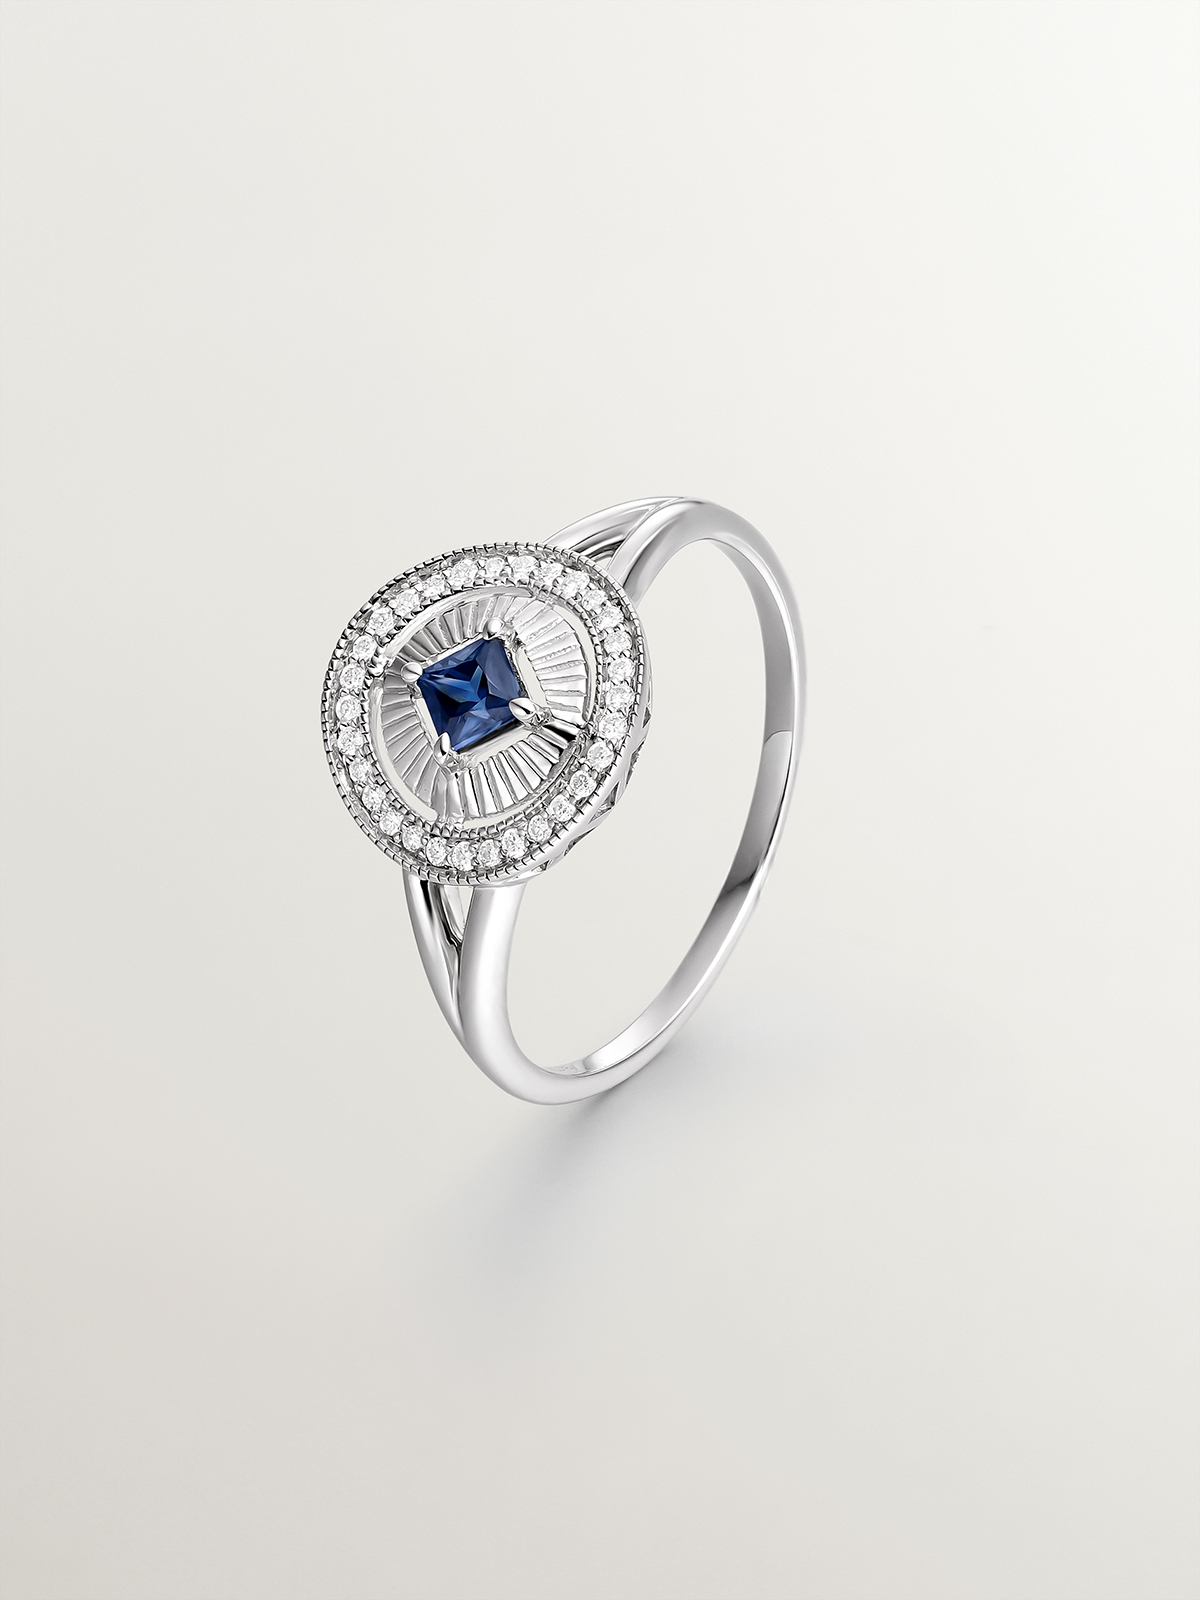 Anillo de oro blanco de 18K con diamantes en talla brillante y zafiro azul en talla princesa